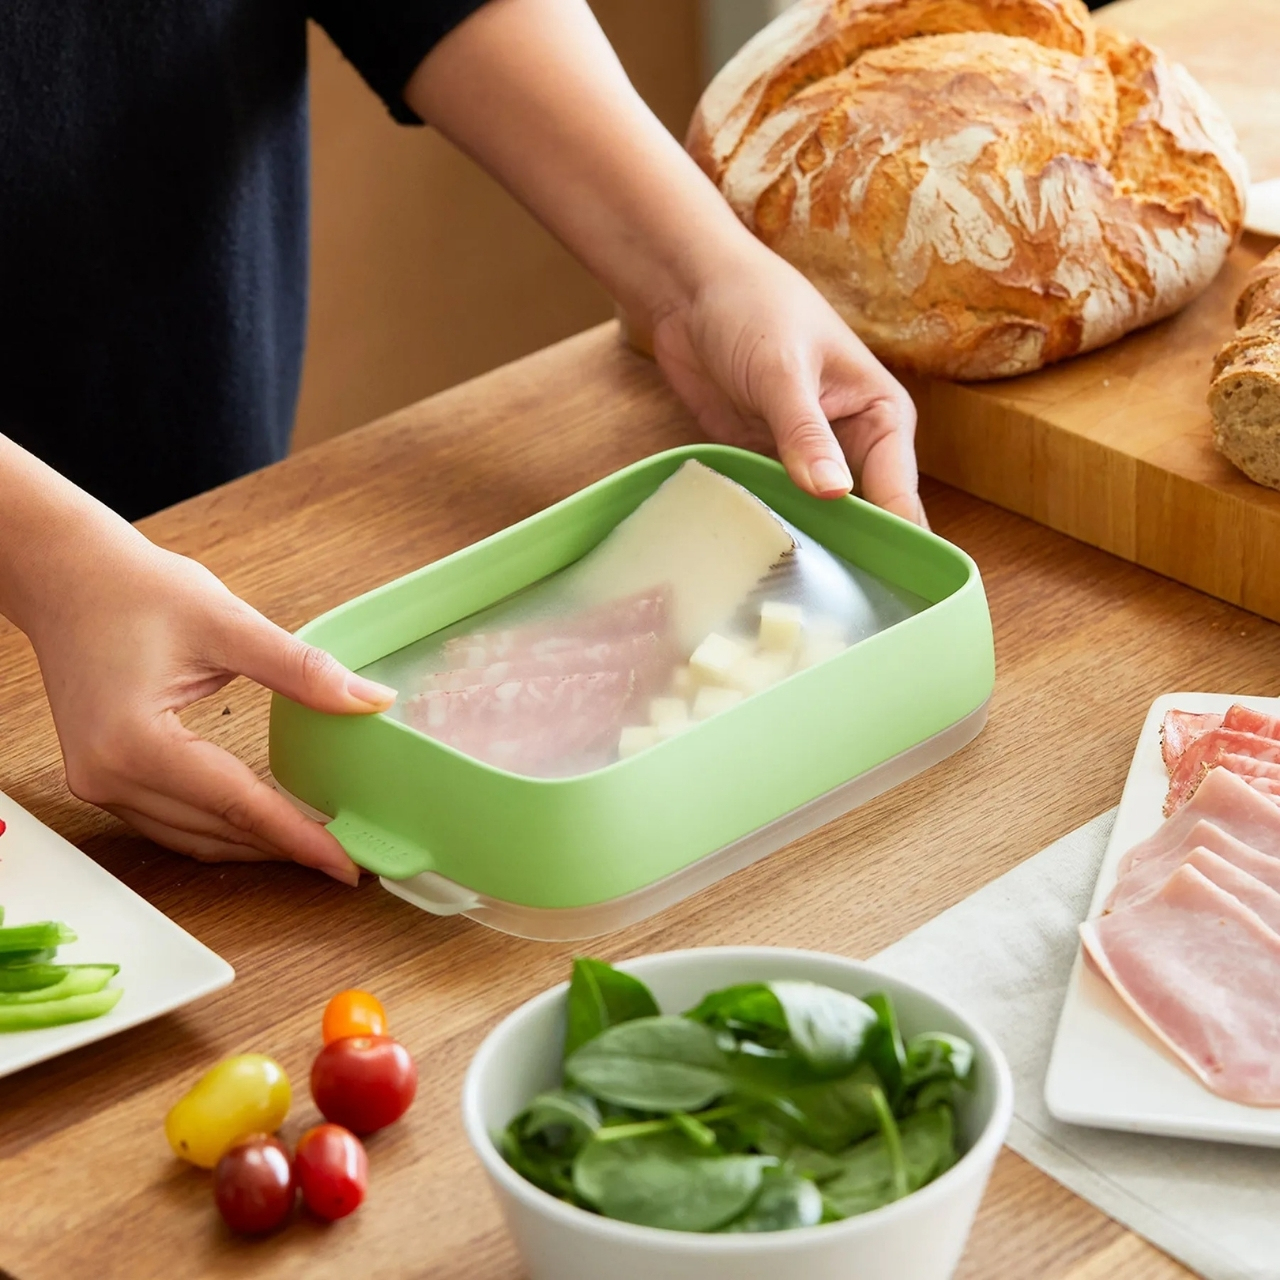 https://www.yankodesign.com/images/design_news/2022/07/reusable-seal-tray-helps-keep-veggies-fresh-and-reduce-single-use-plastic/8.jpg